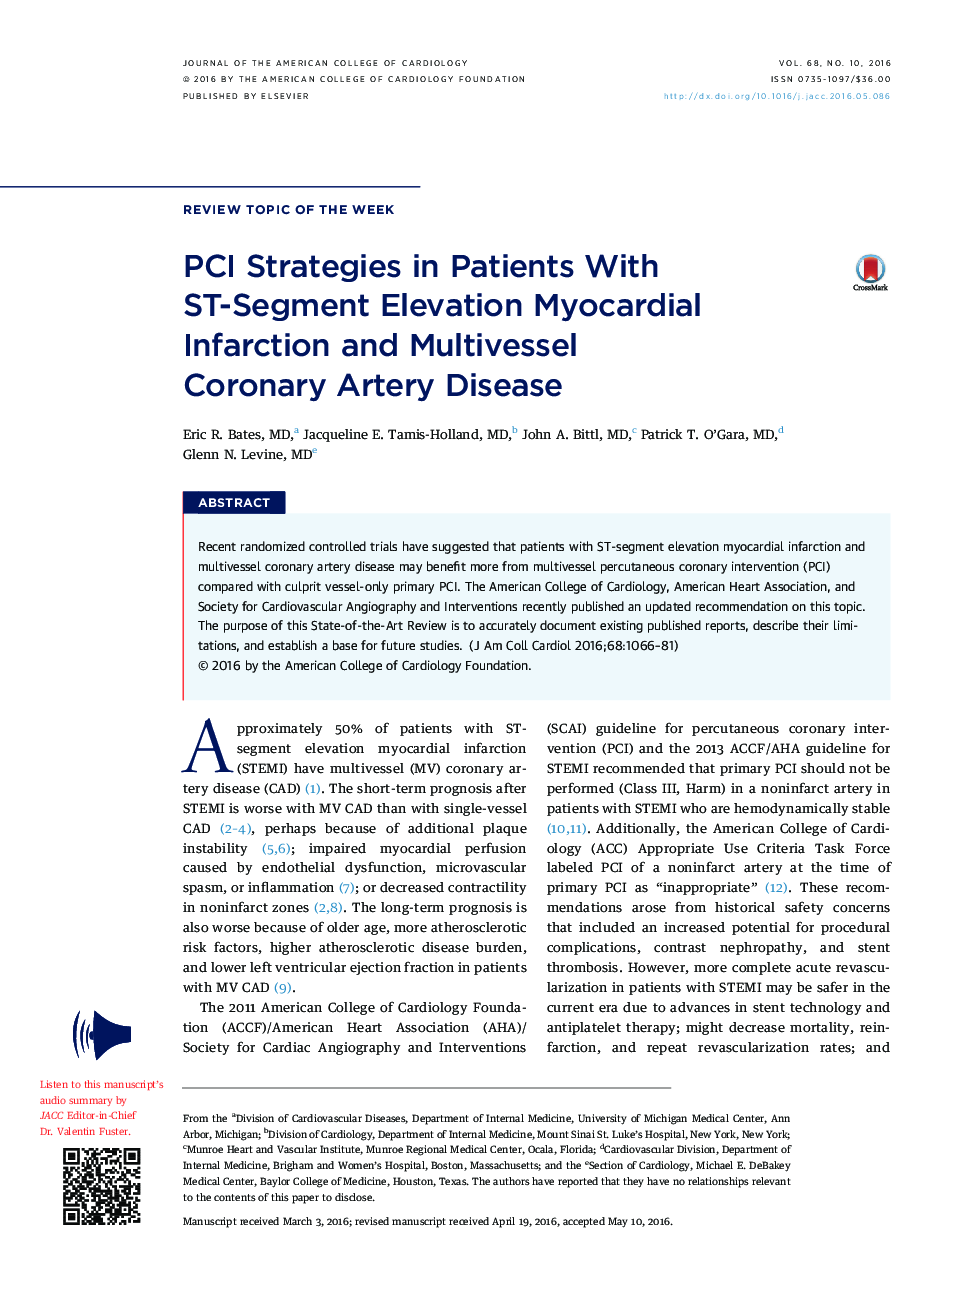 PCI Strategies in Patients With ST-Segment Elevation Myocardial Infarction and Multivessel CoronaryÂ ArteryÂ Disease